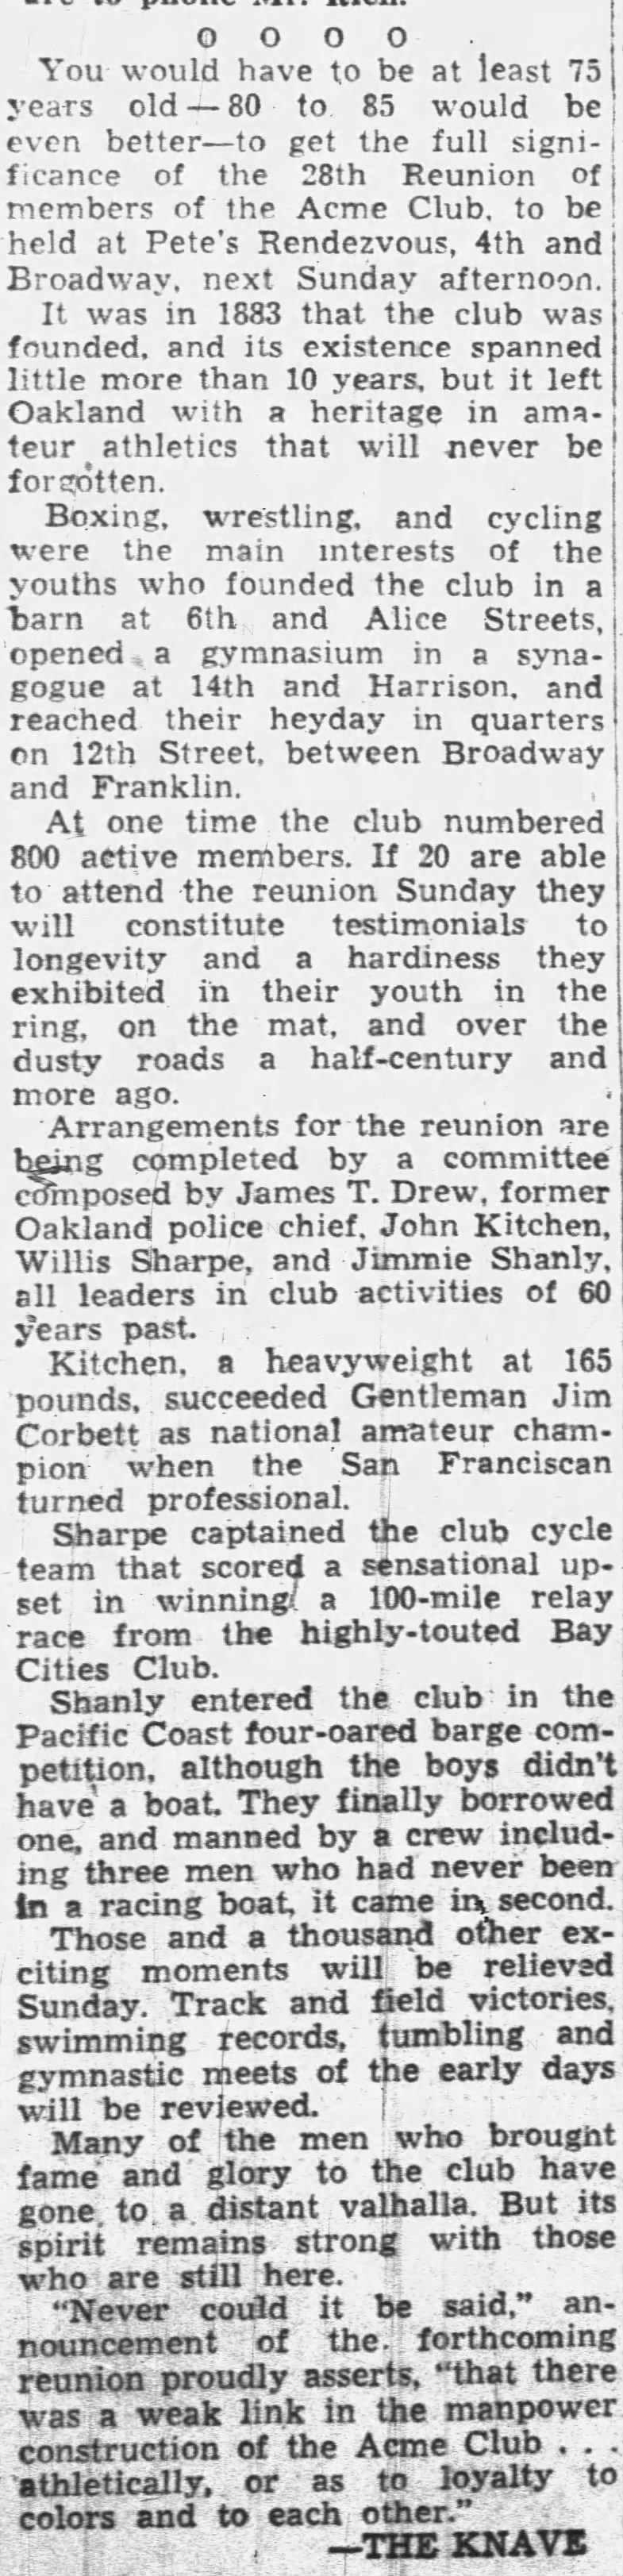 1948 Acme Club reunion